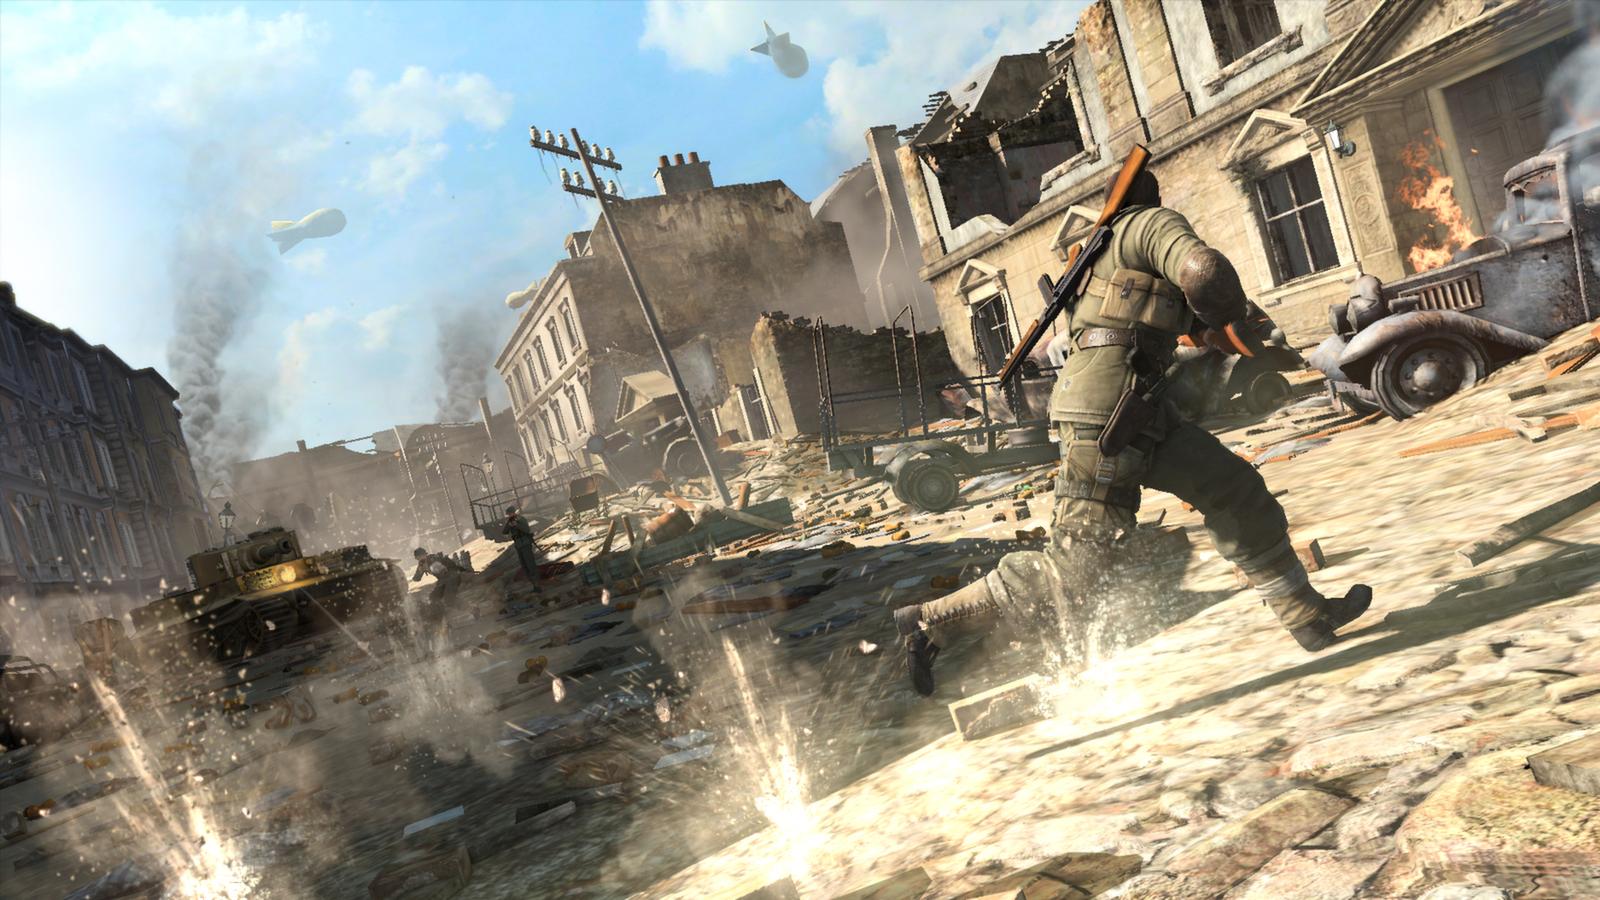 Screenshot №19 from game Sniper Elite V2